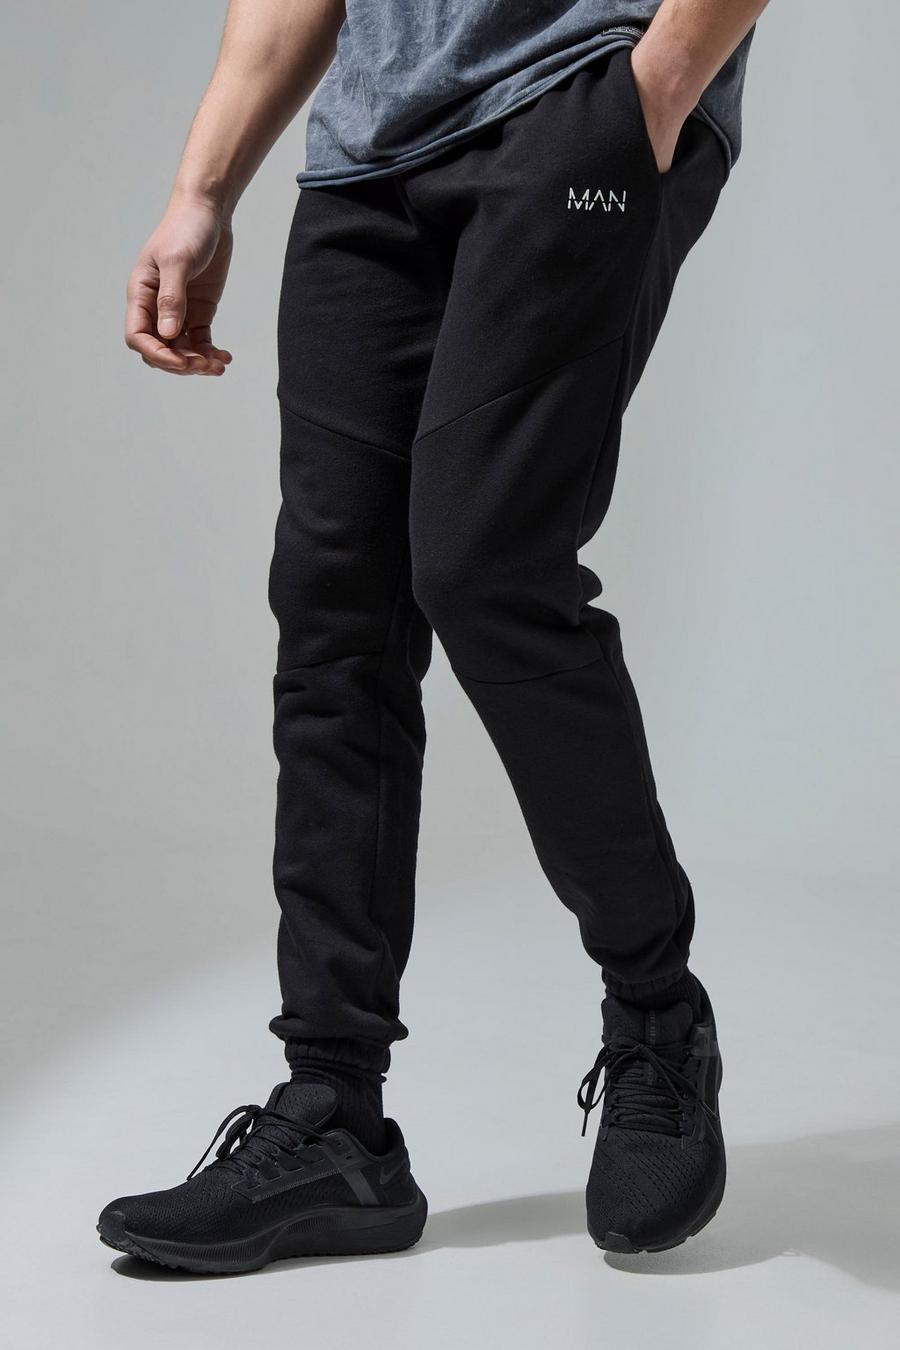 Pantaloni tuta Man Active Gym con tasche - set di 2 paia, Black image number 1